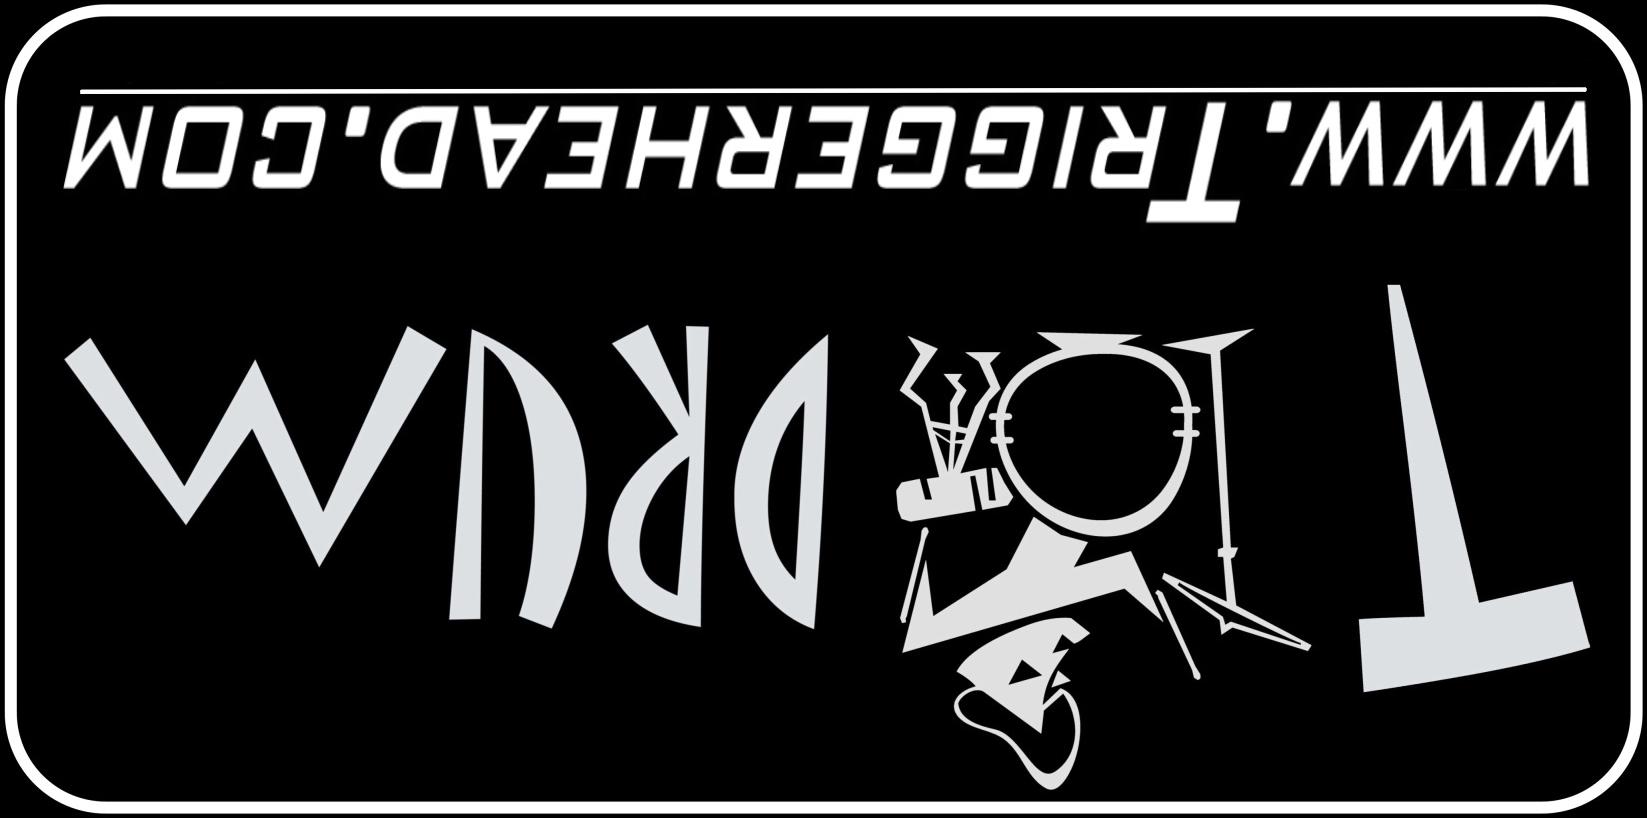 Foto-Logo-Triggerhead-drum-accessories-since-1999